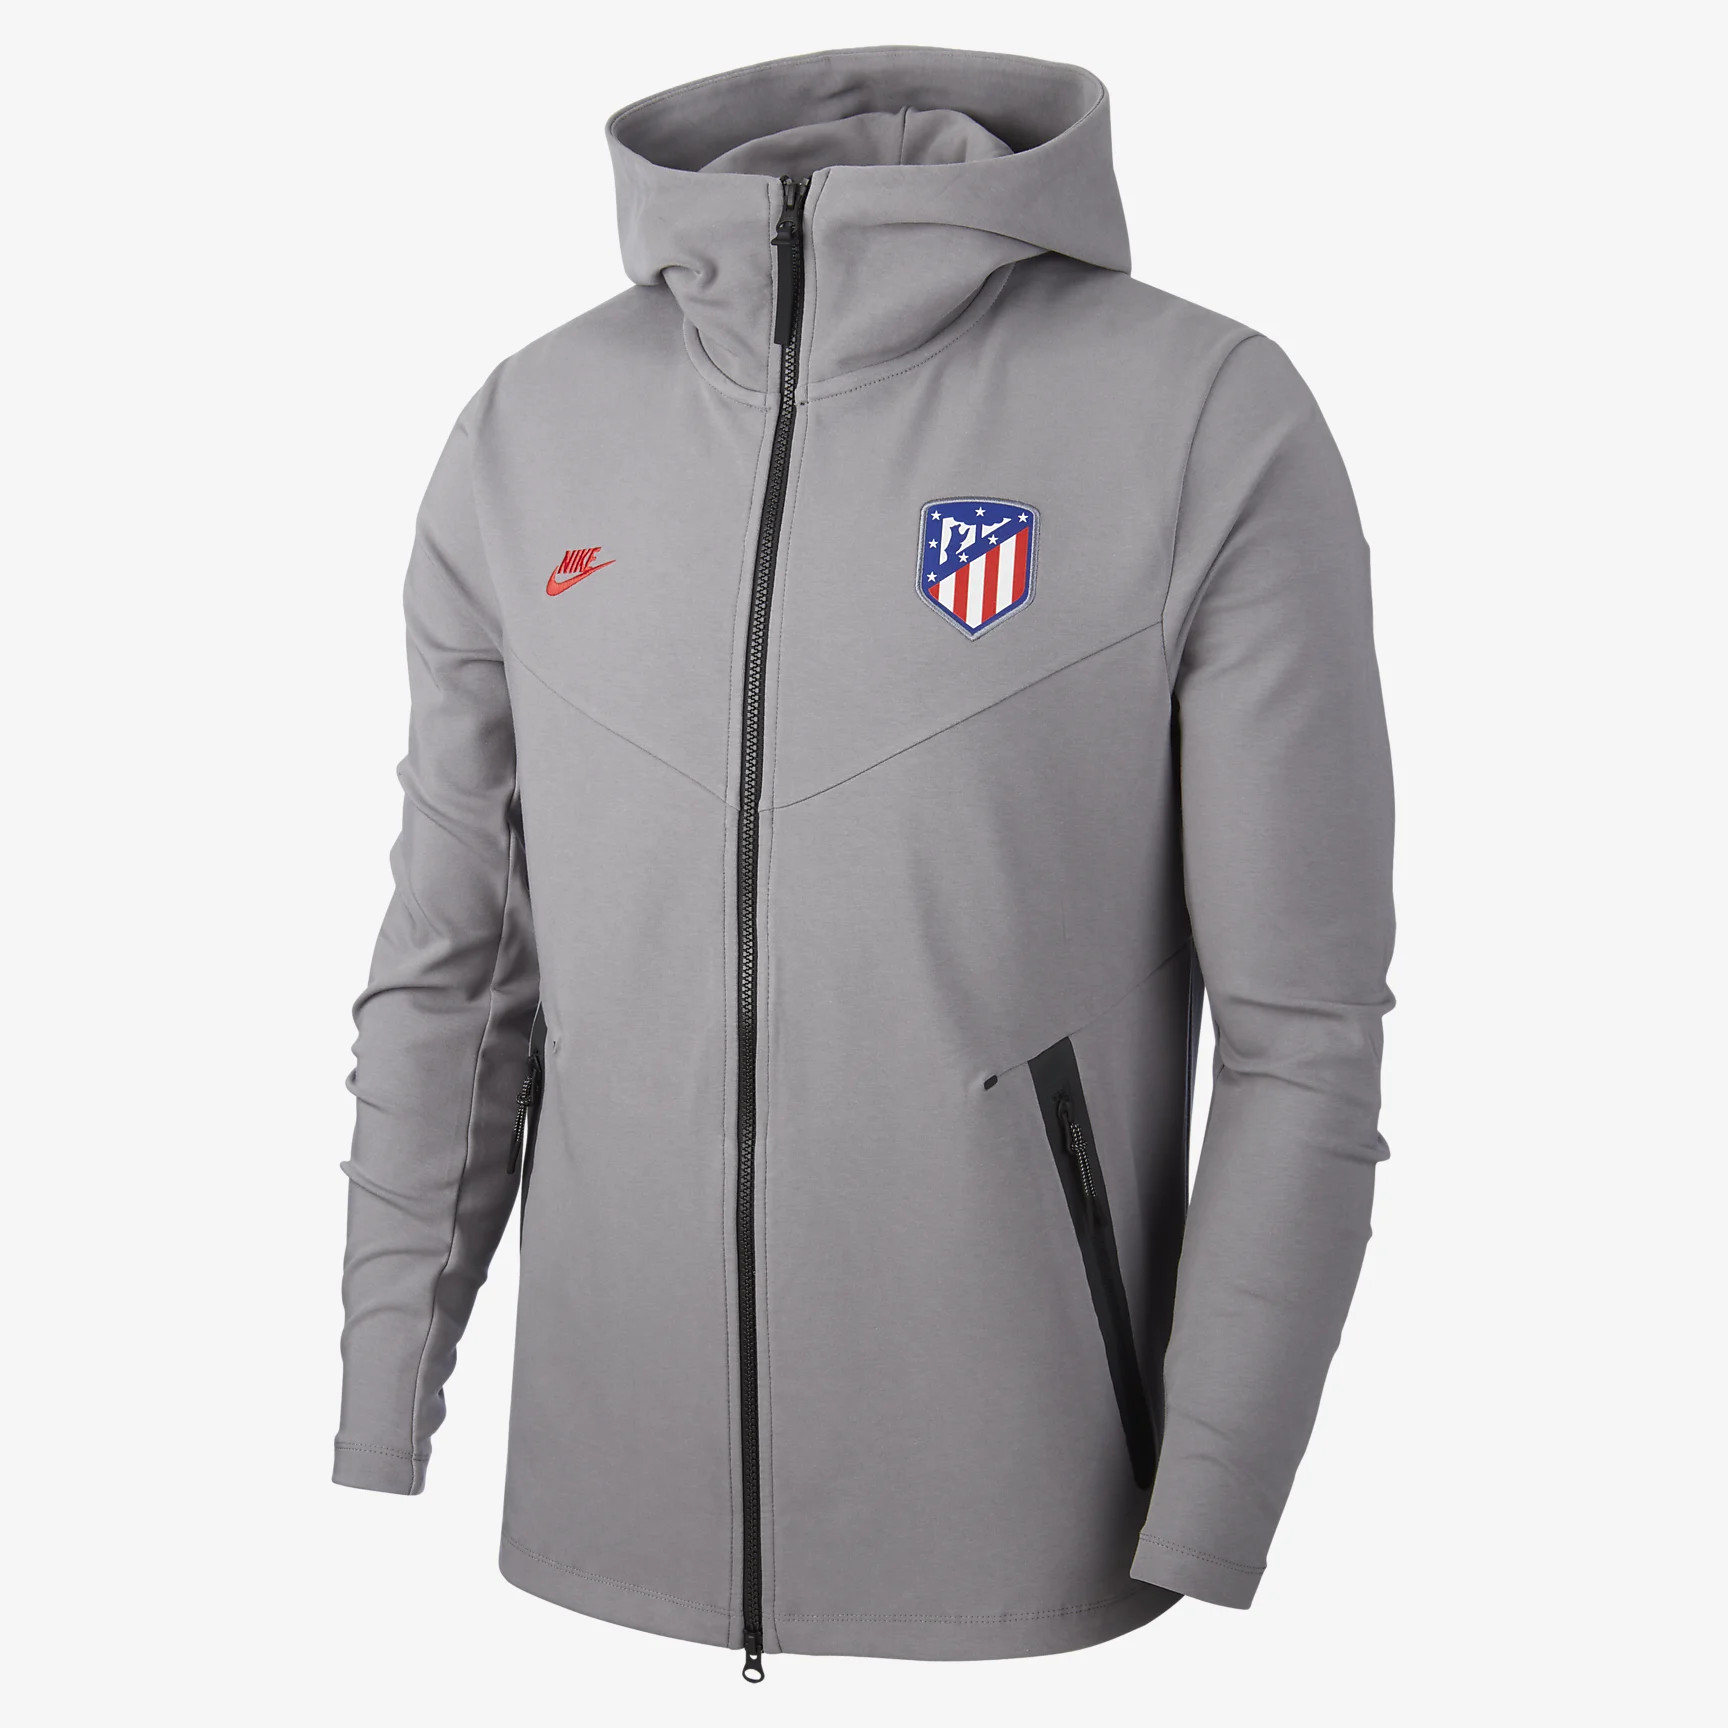 Atletico Madrid Tech fleece - Voetbalshirts.com